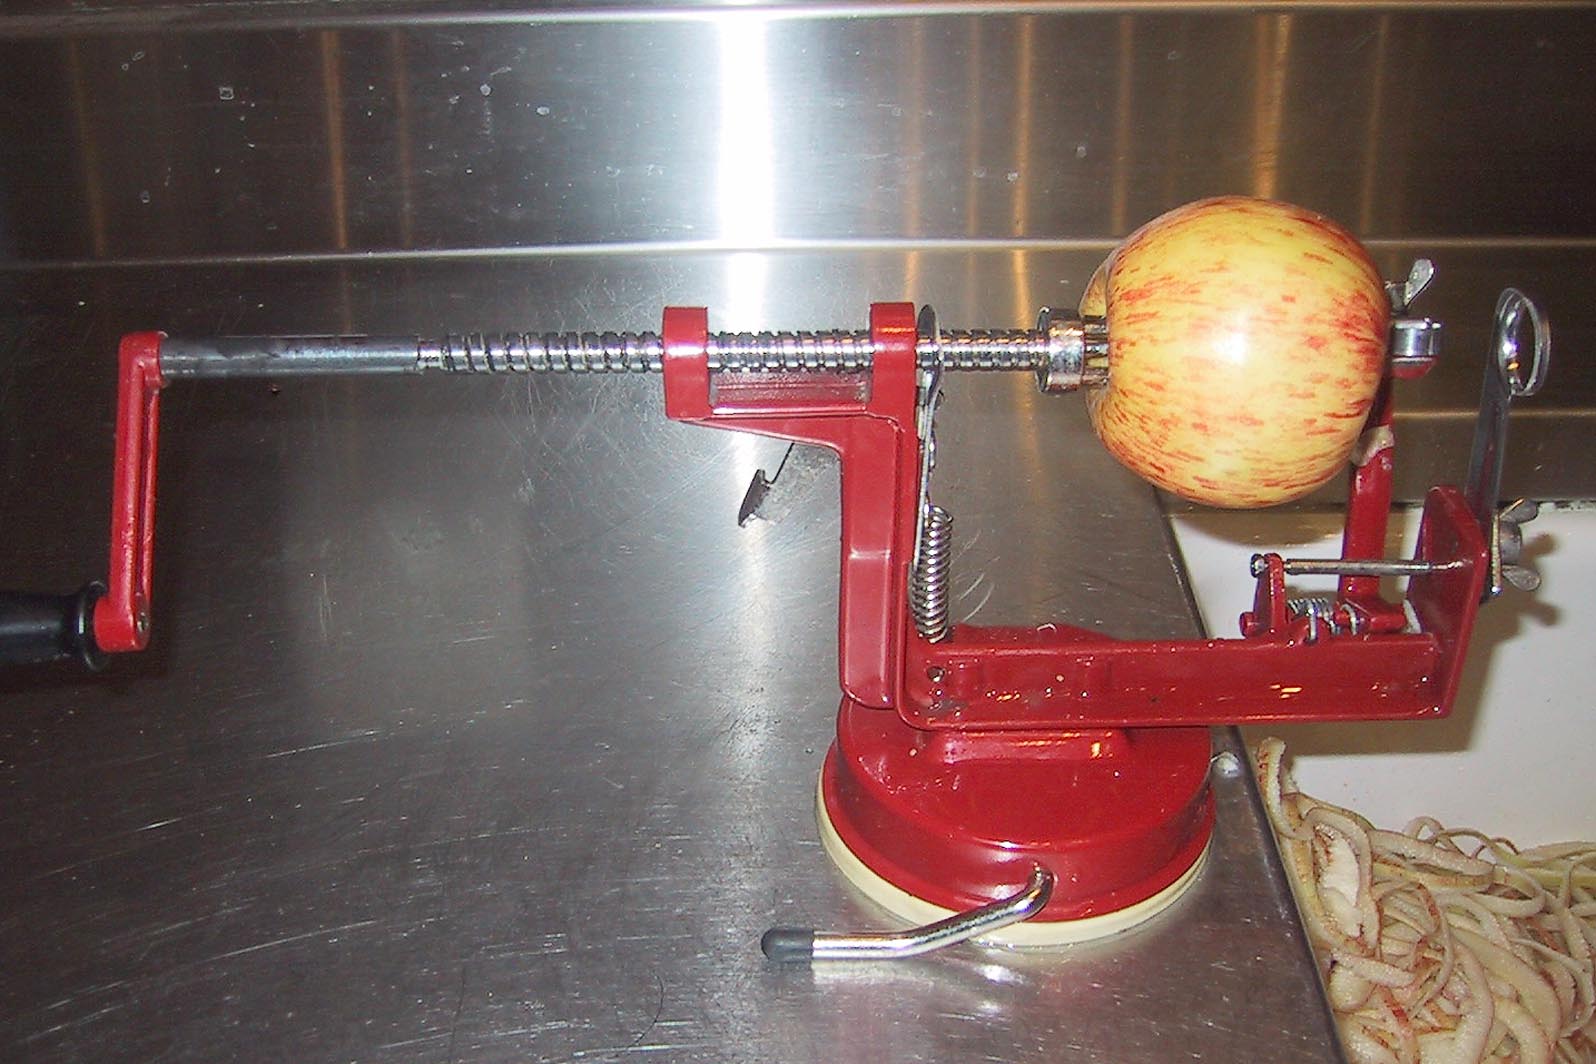 The magical apple machine